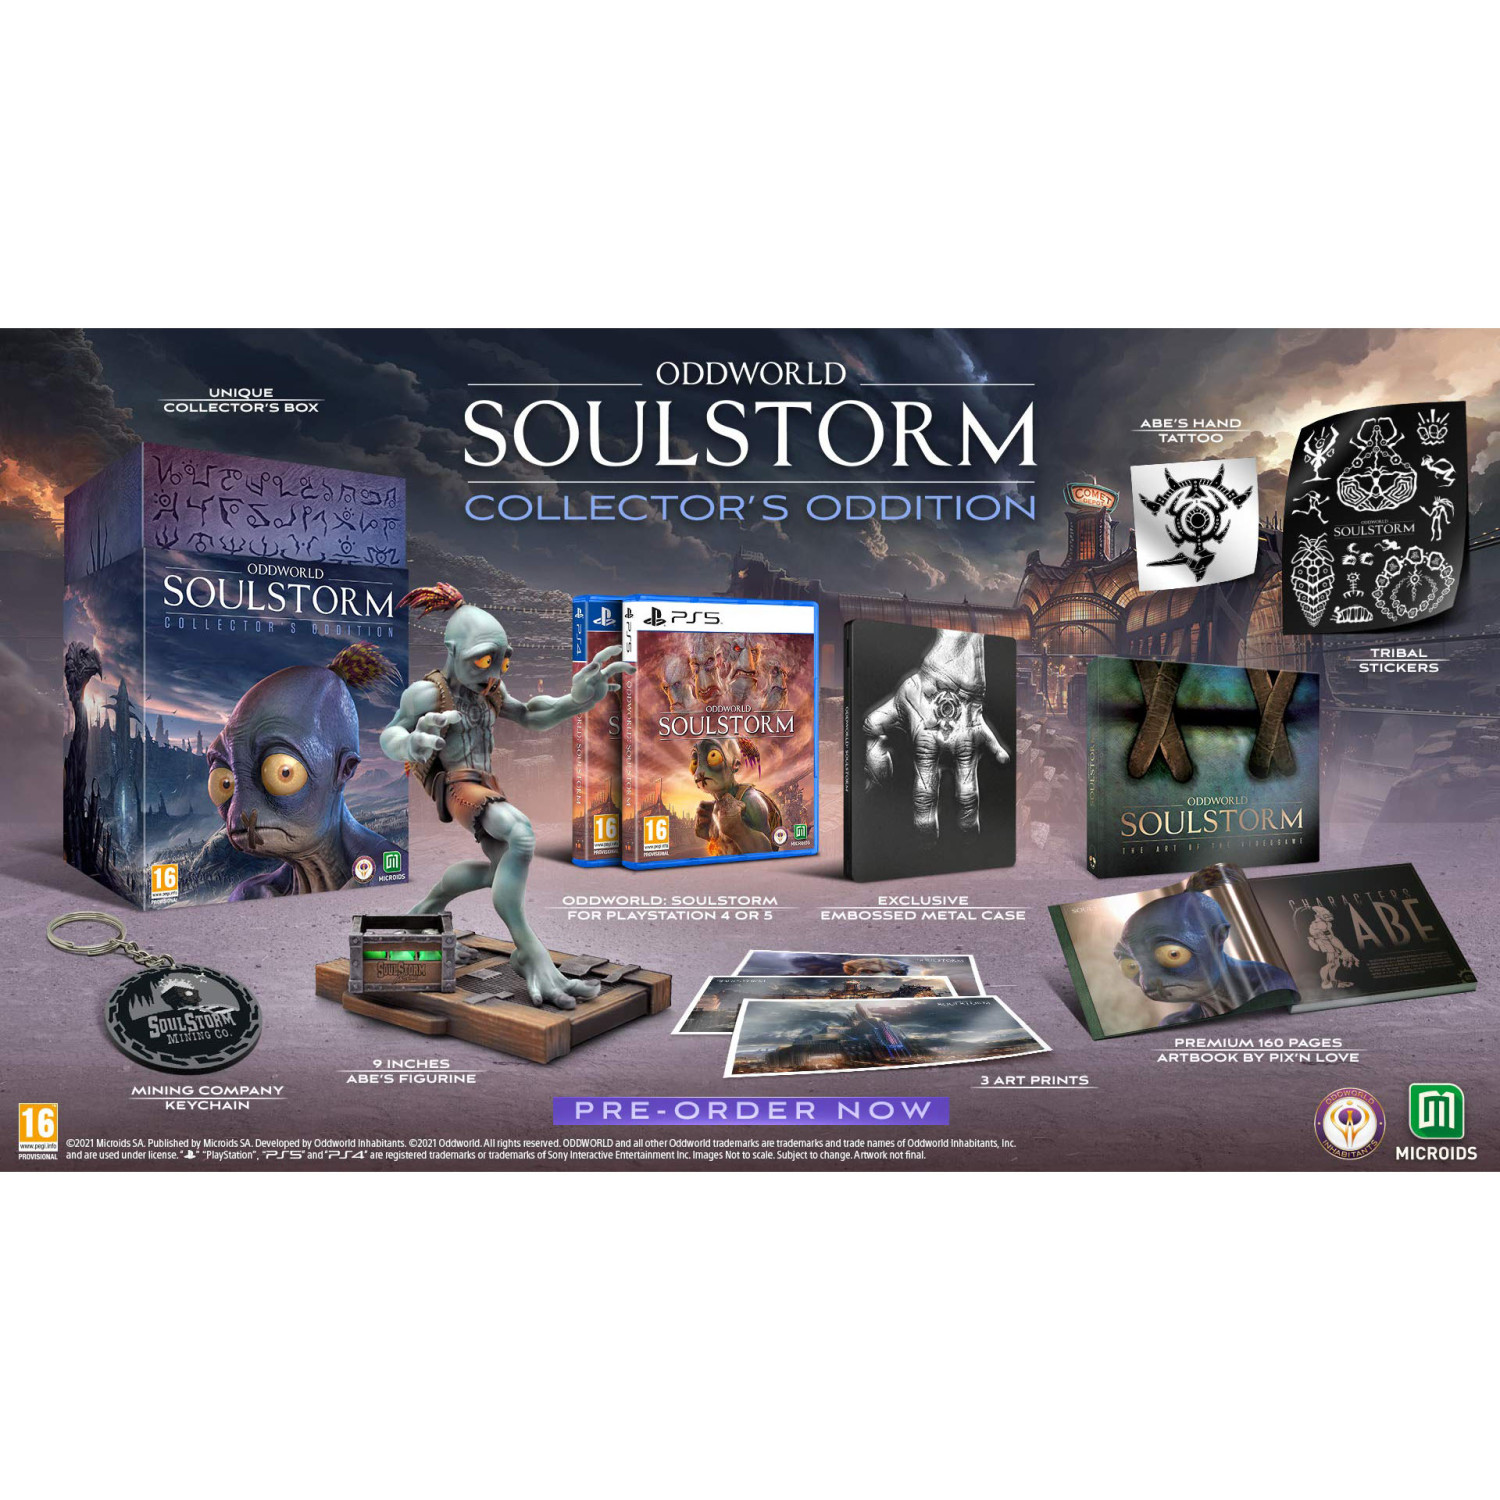 بازی Oddworld: Soulstorm Collector's Oddition - PS4-1